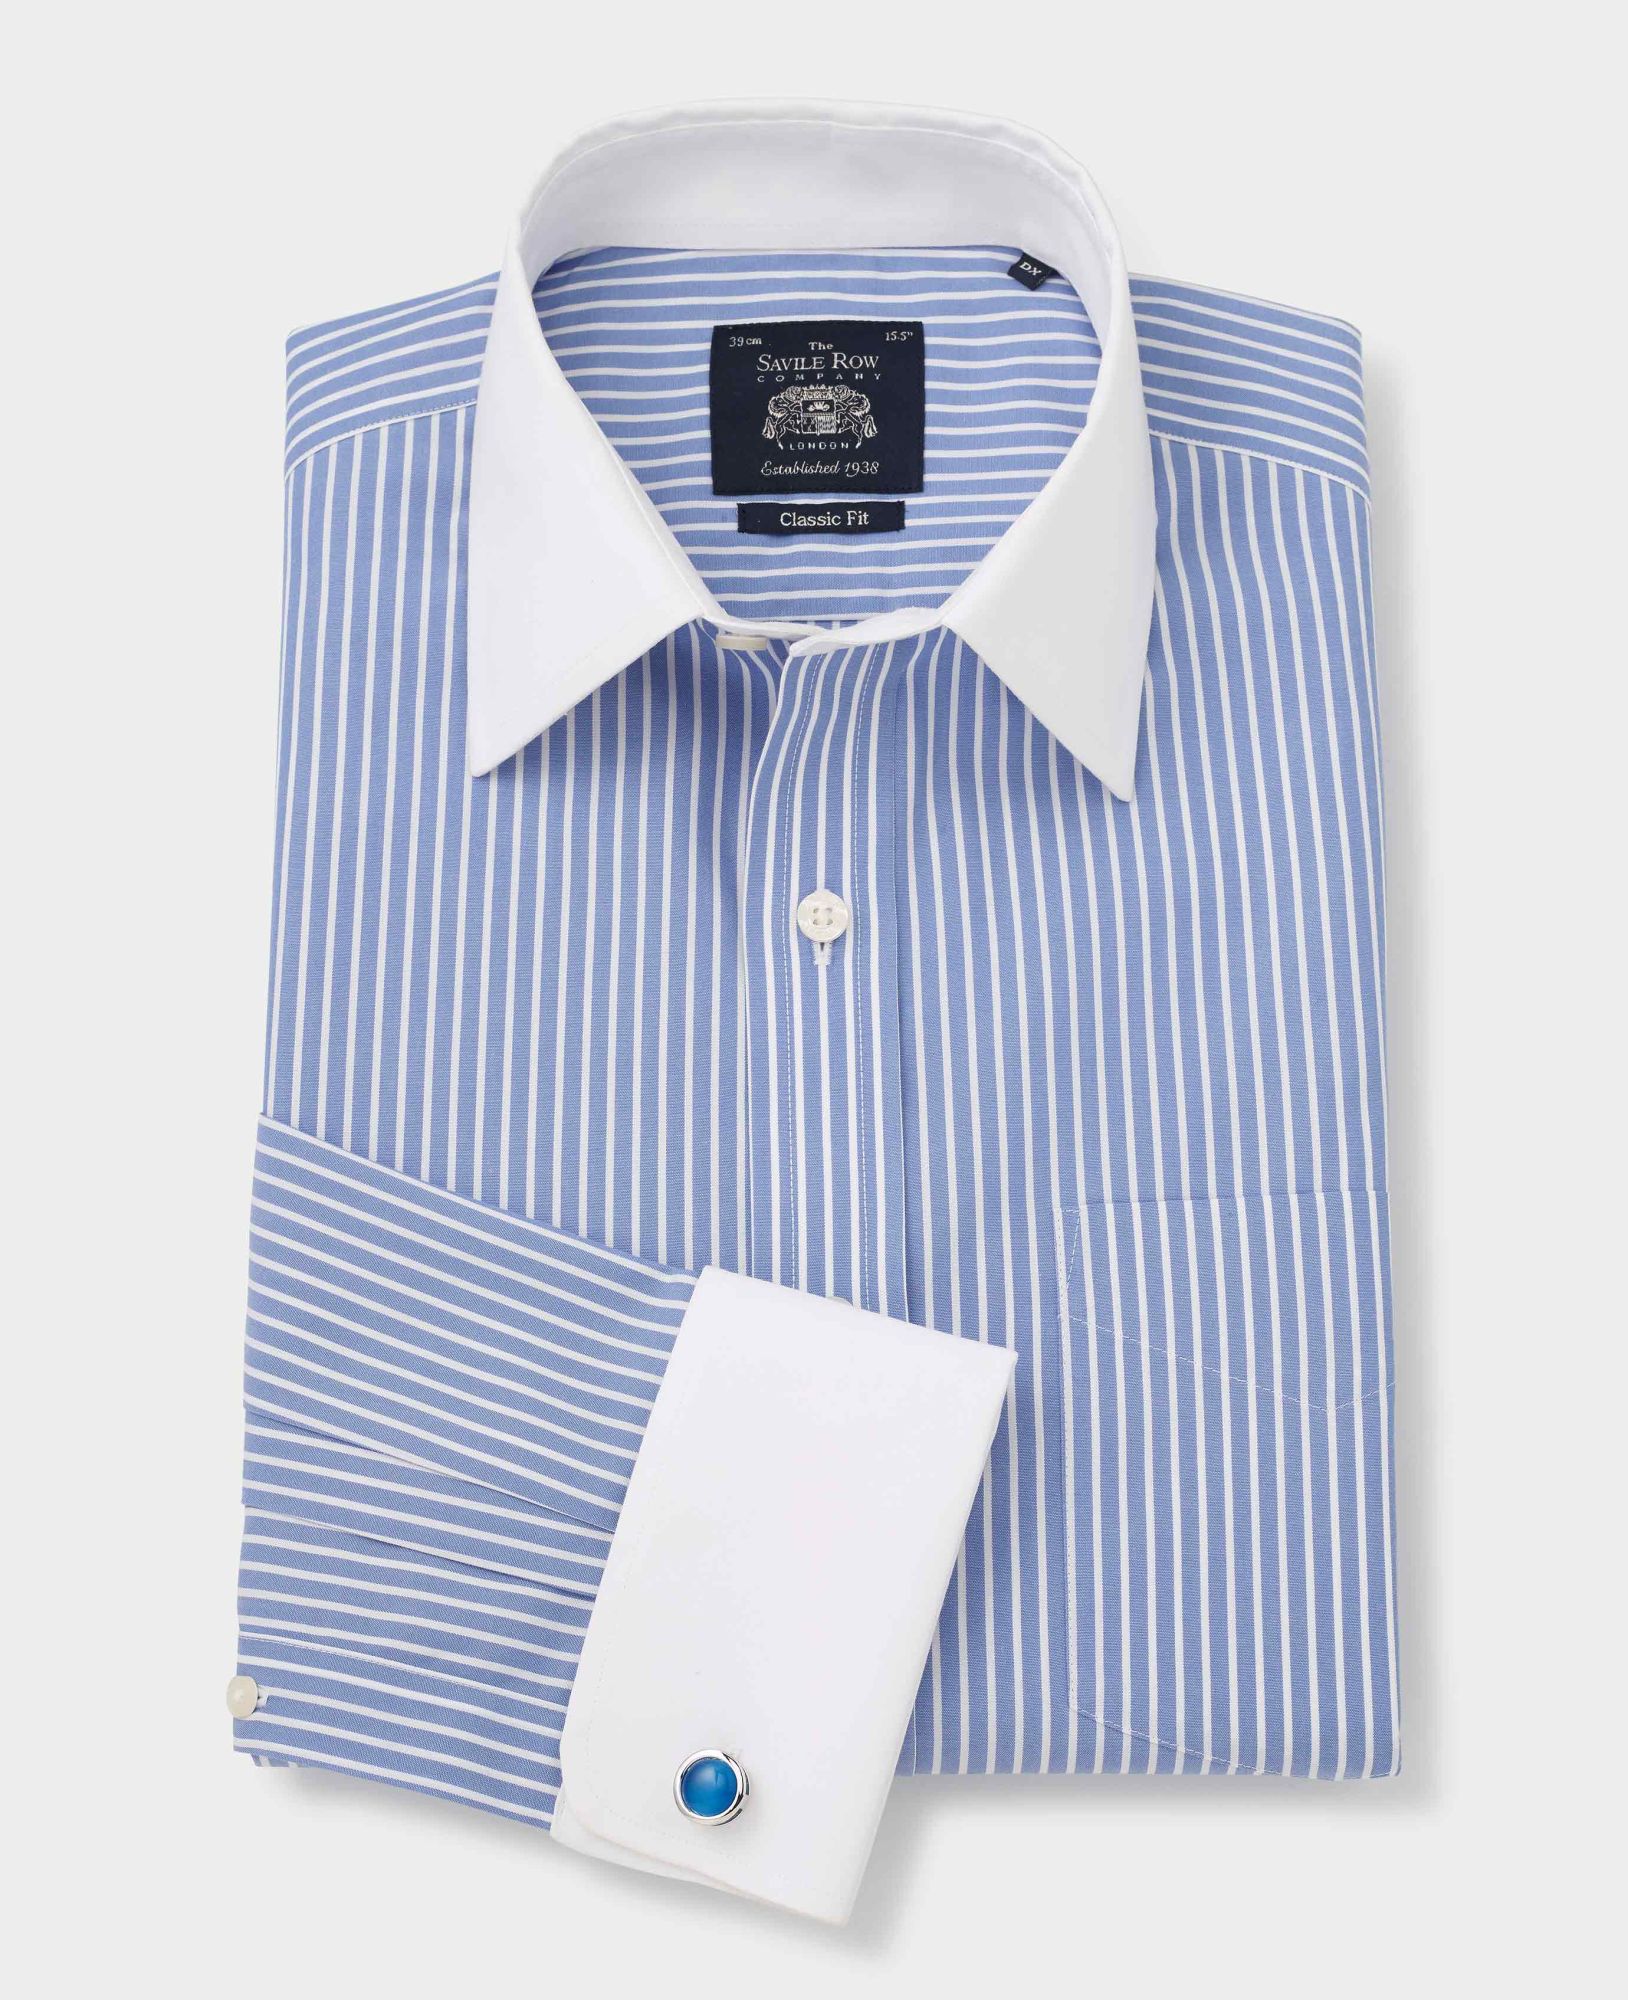 Blue White Stripe Classic Fit Non-Iron Shirt With White Collar & Cuffs - Double Cuff 18 1/2